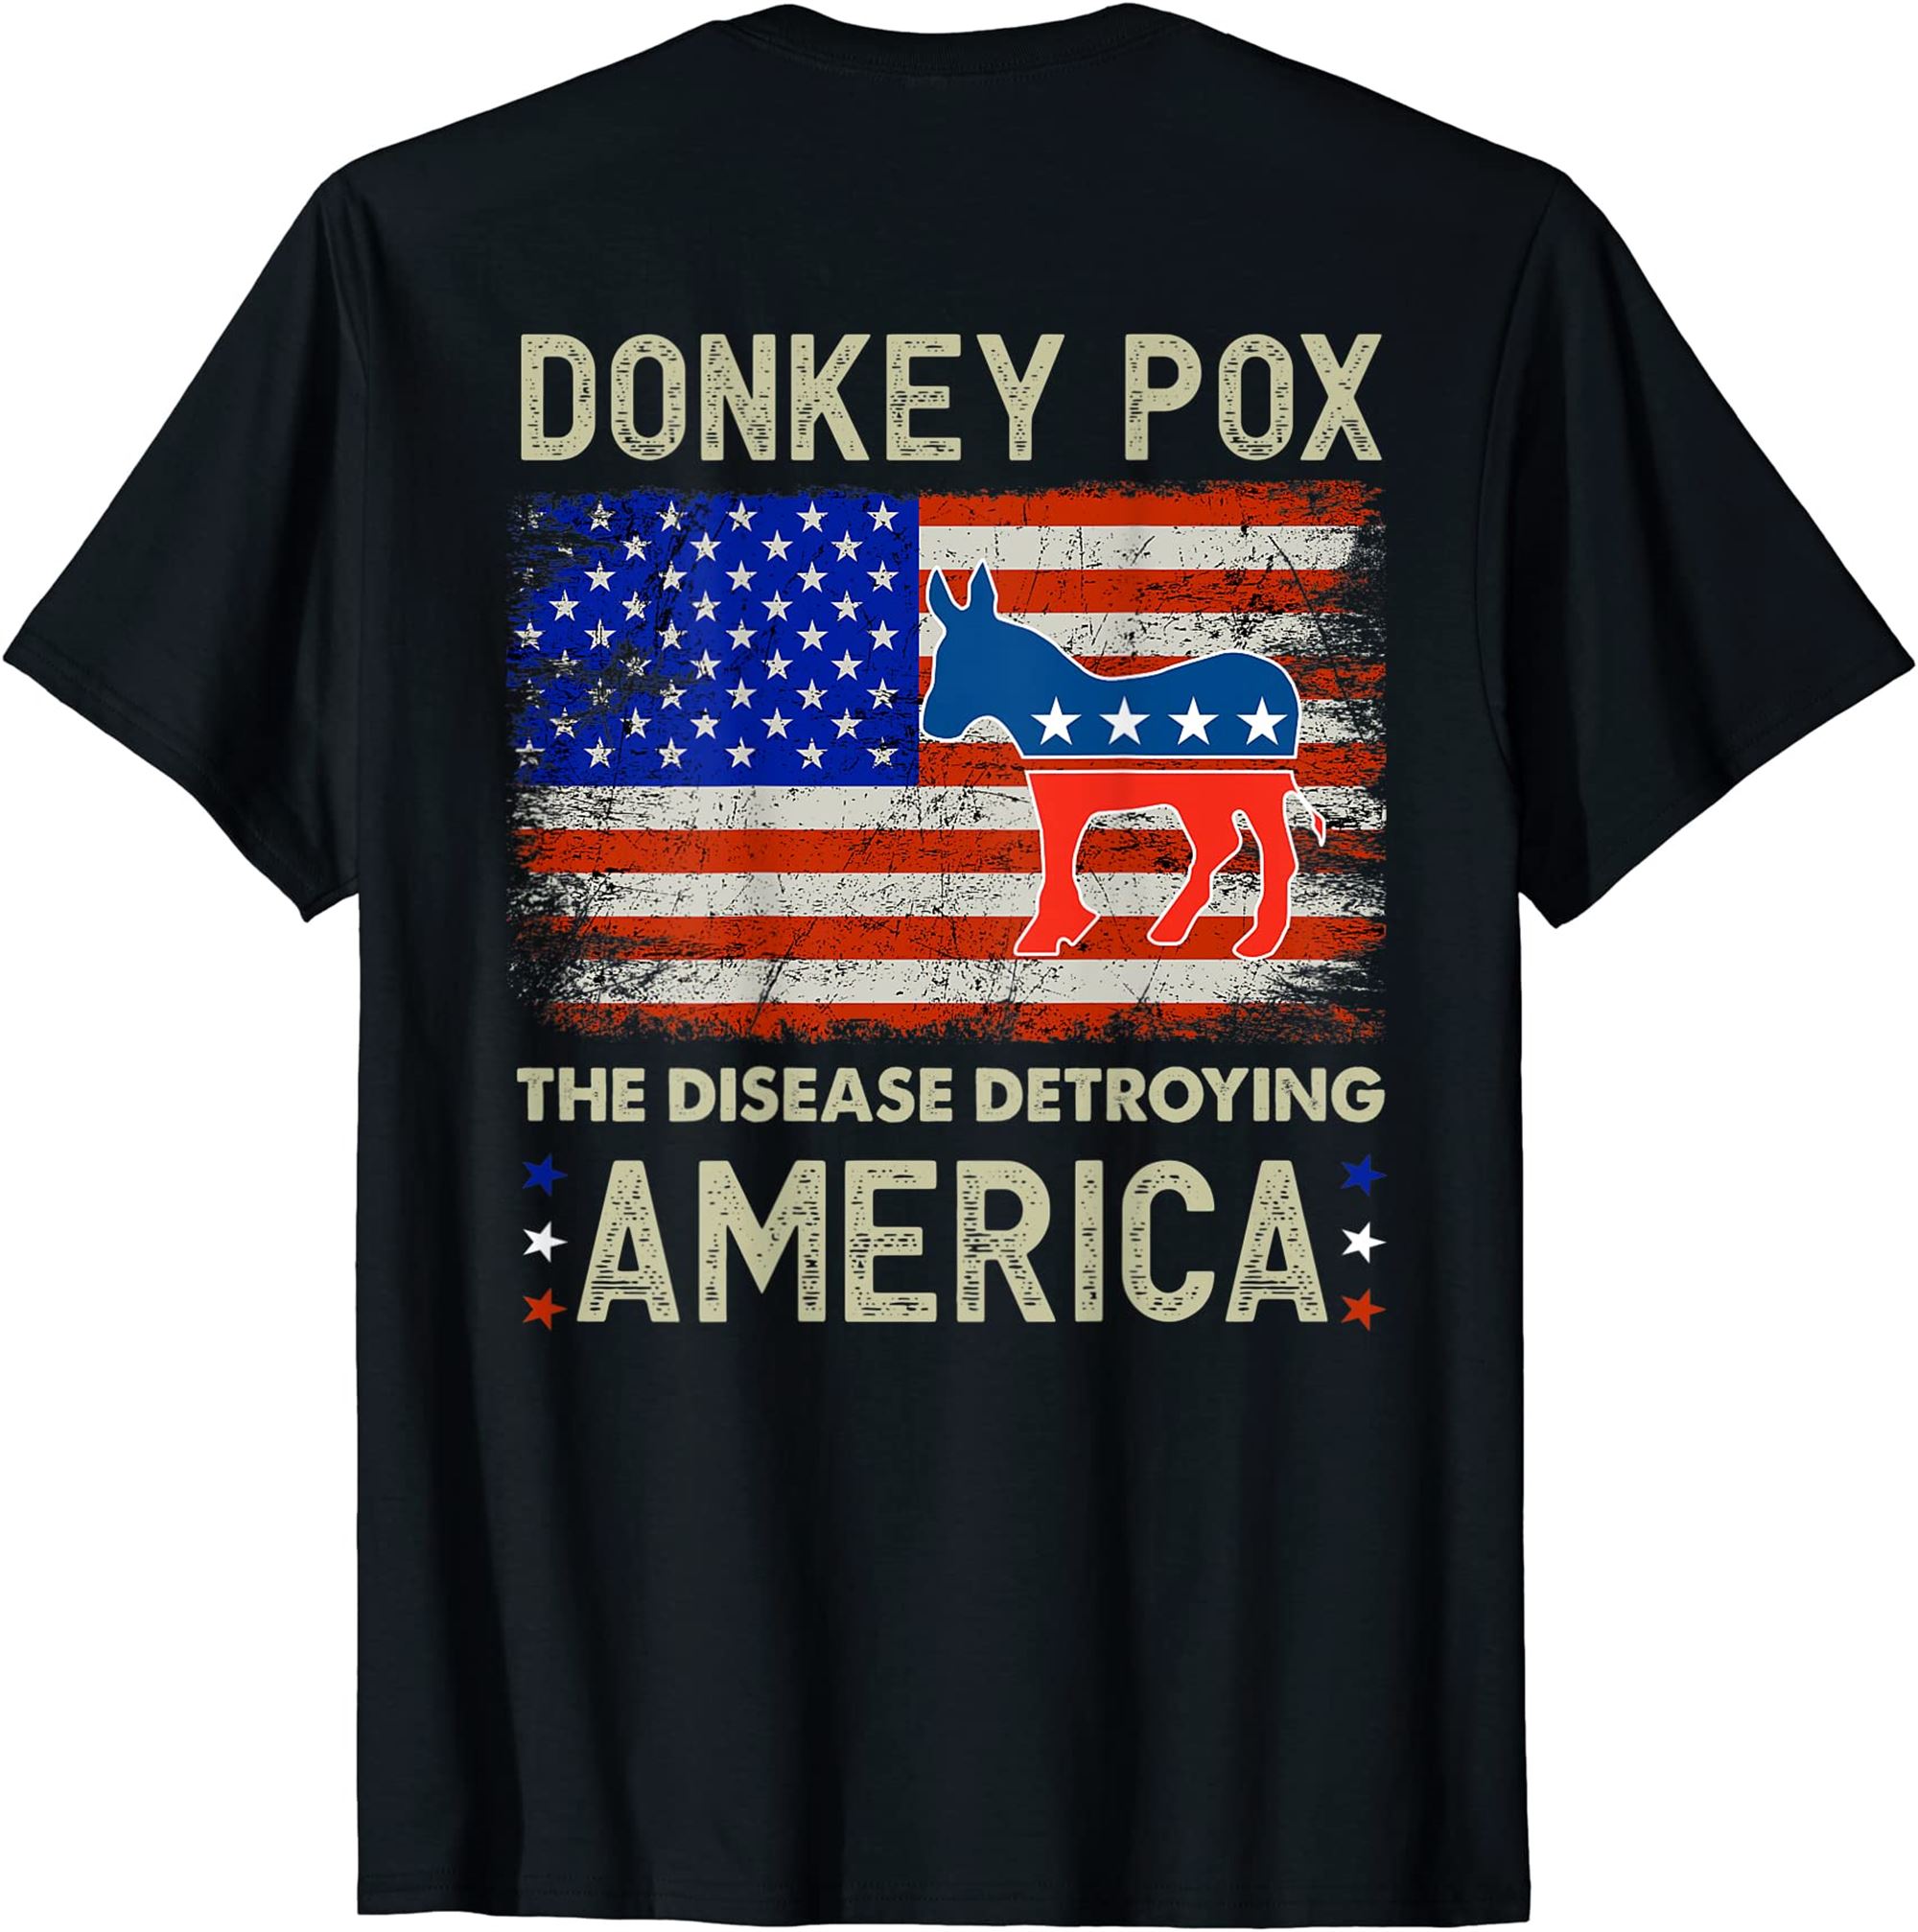 Donkey Pox The Disease Destroying America Donkeypox Back T Shirt Size Up To 5xl